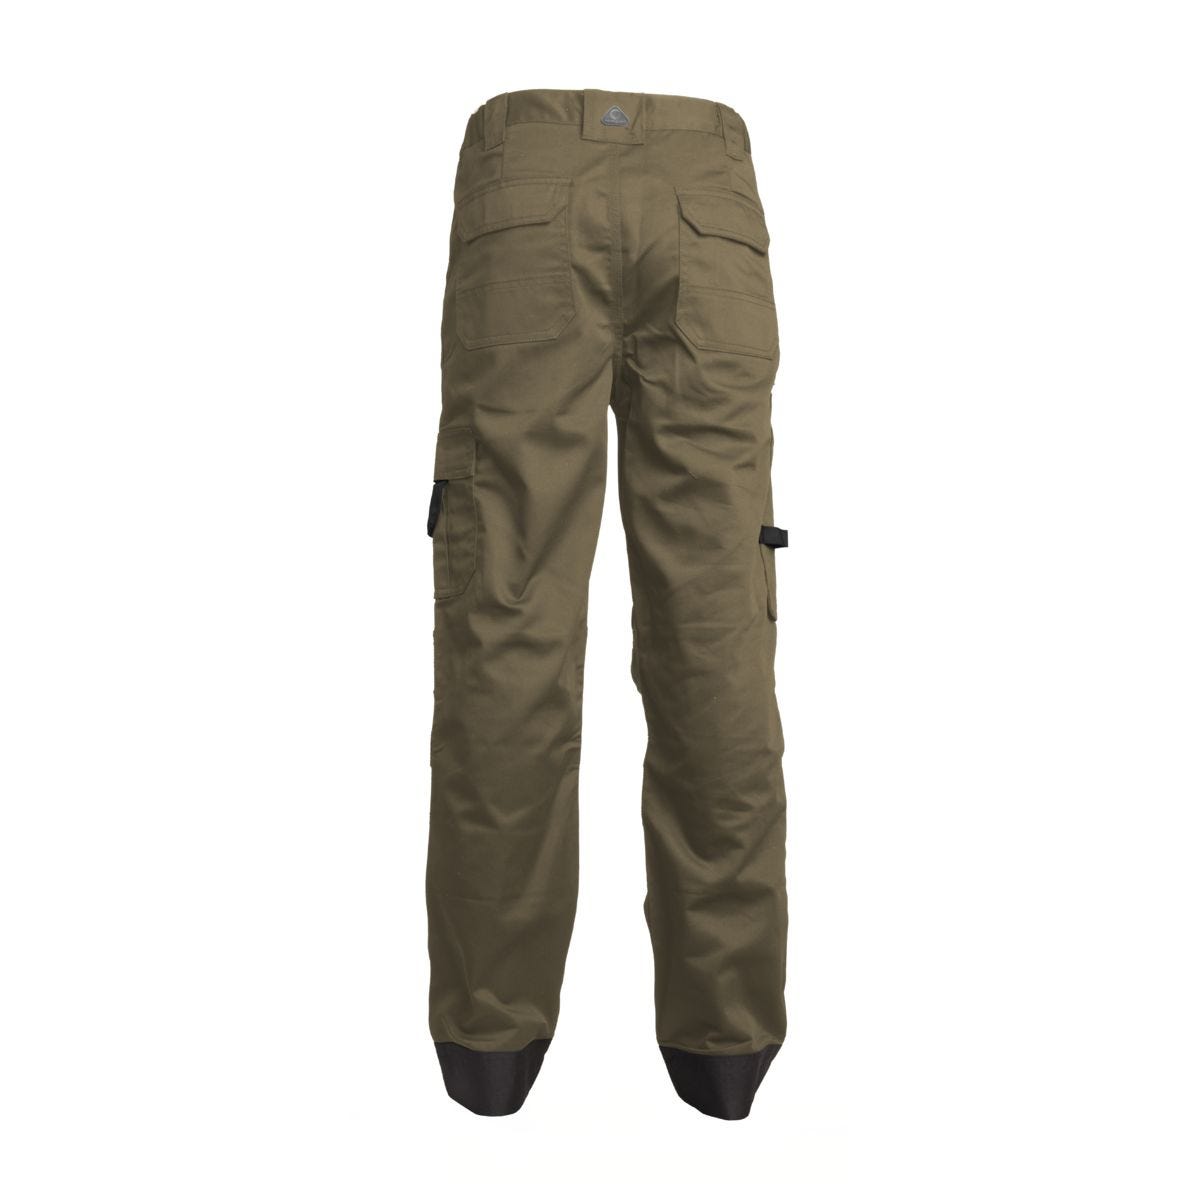 Pantalon CLASS beige - COVERGUARD - Taille XL 1